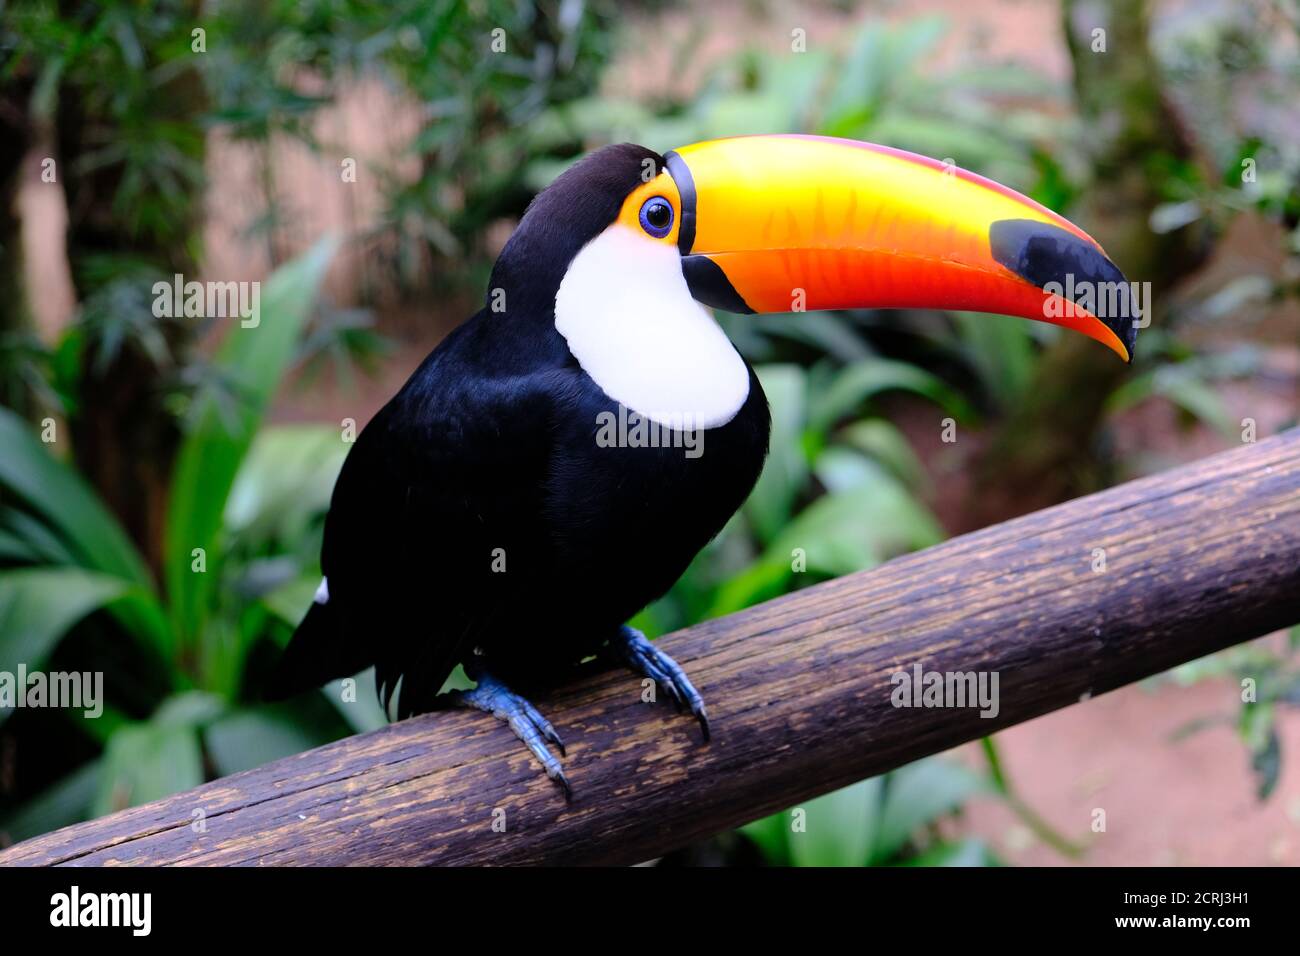 Brésil Foz do Iguaçu - Zoo - Parque das Aves Toco toucan (Ramphastos toco) Banque D'Images